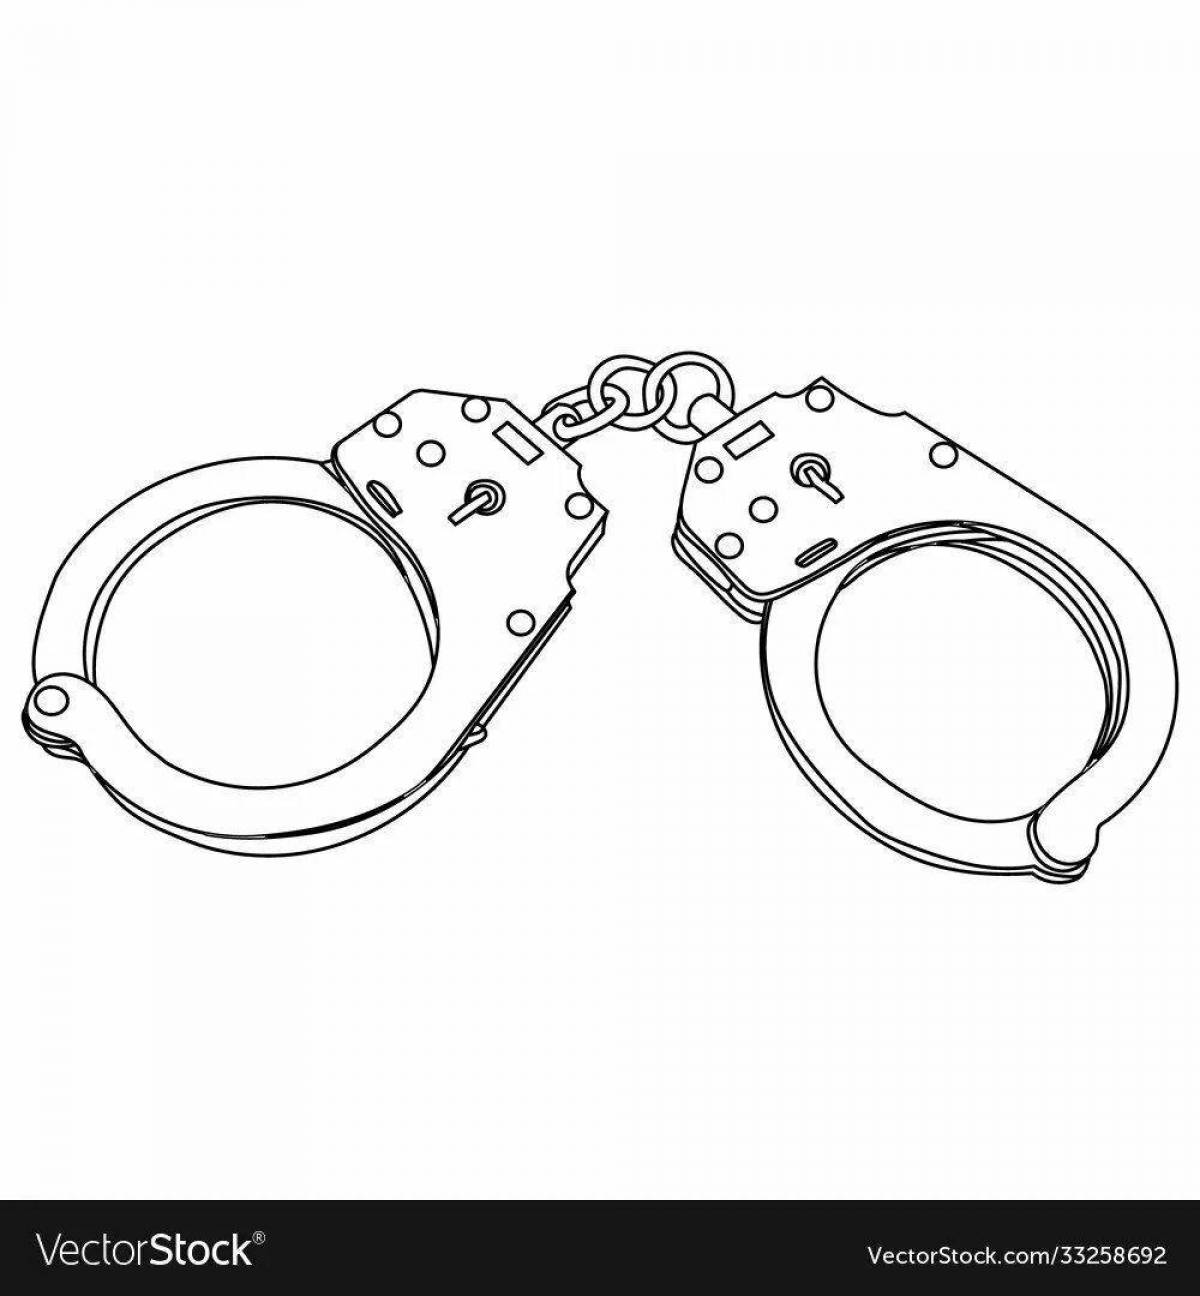 Unique handcuffs coloring page